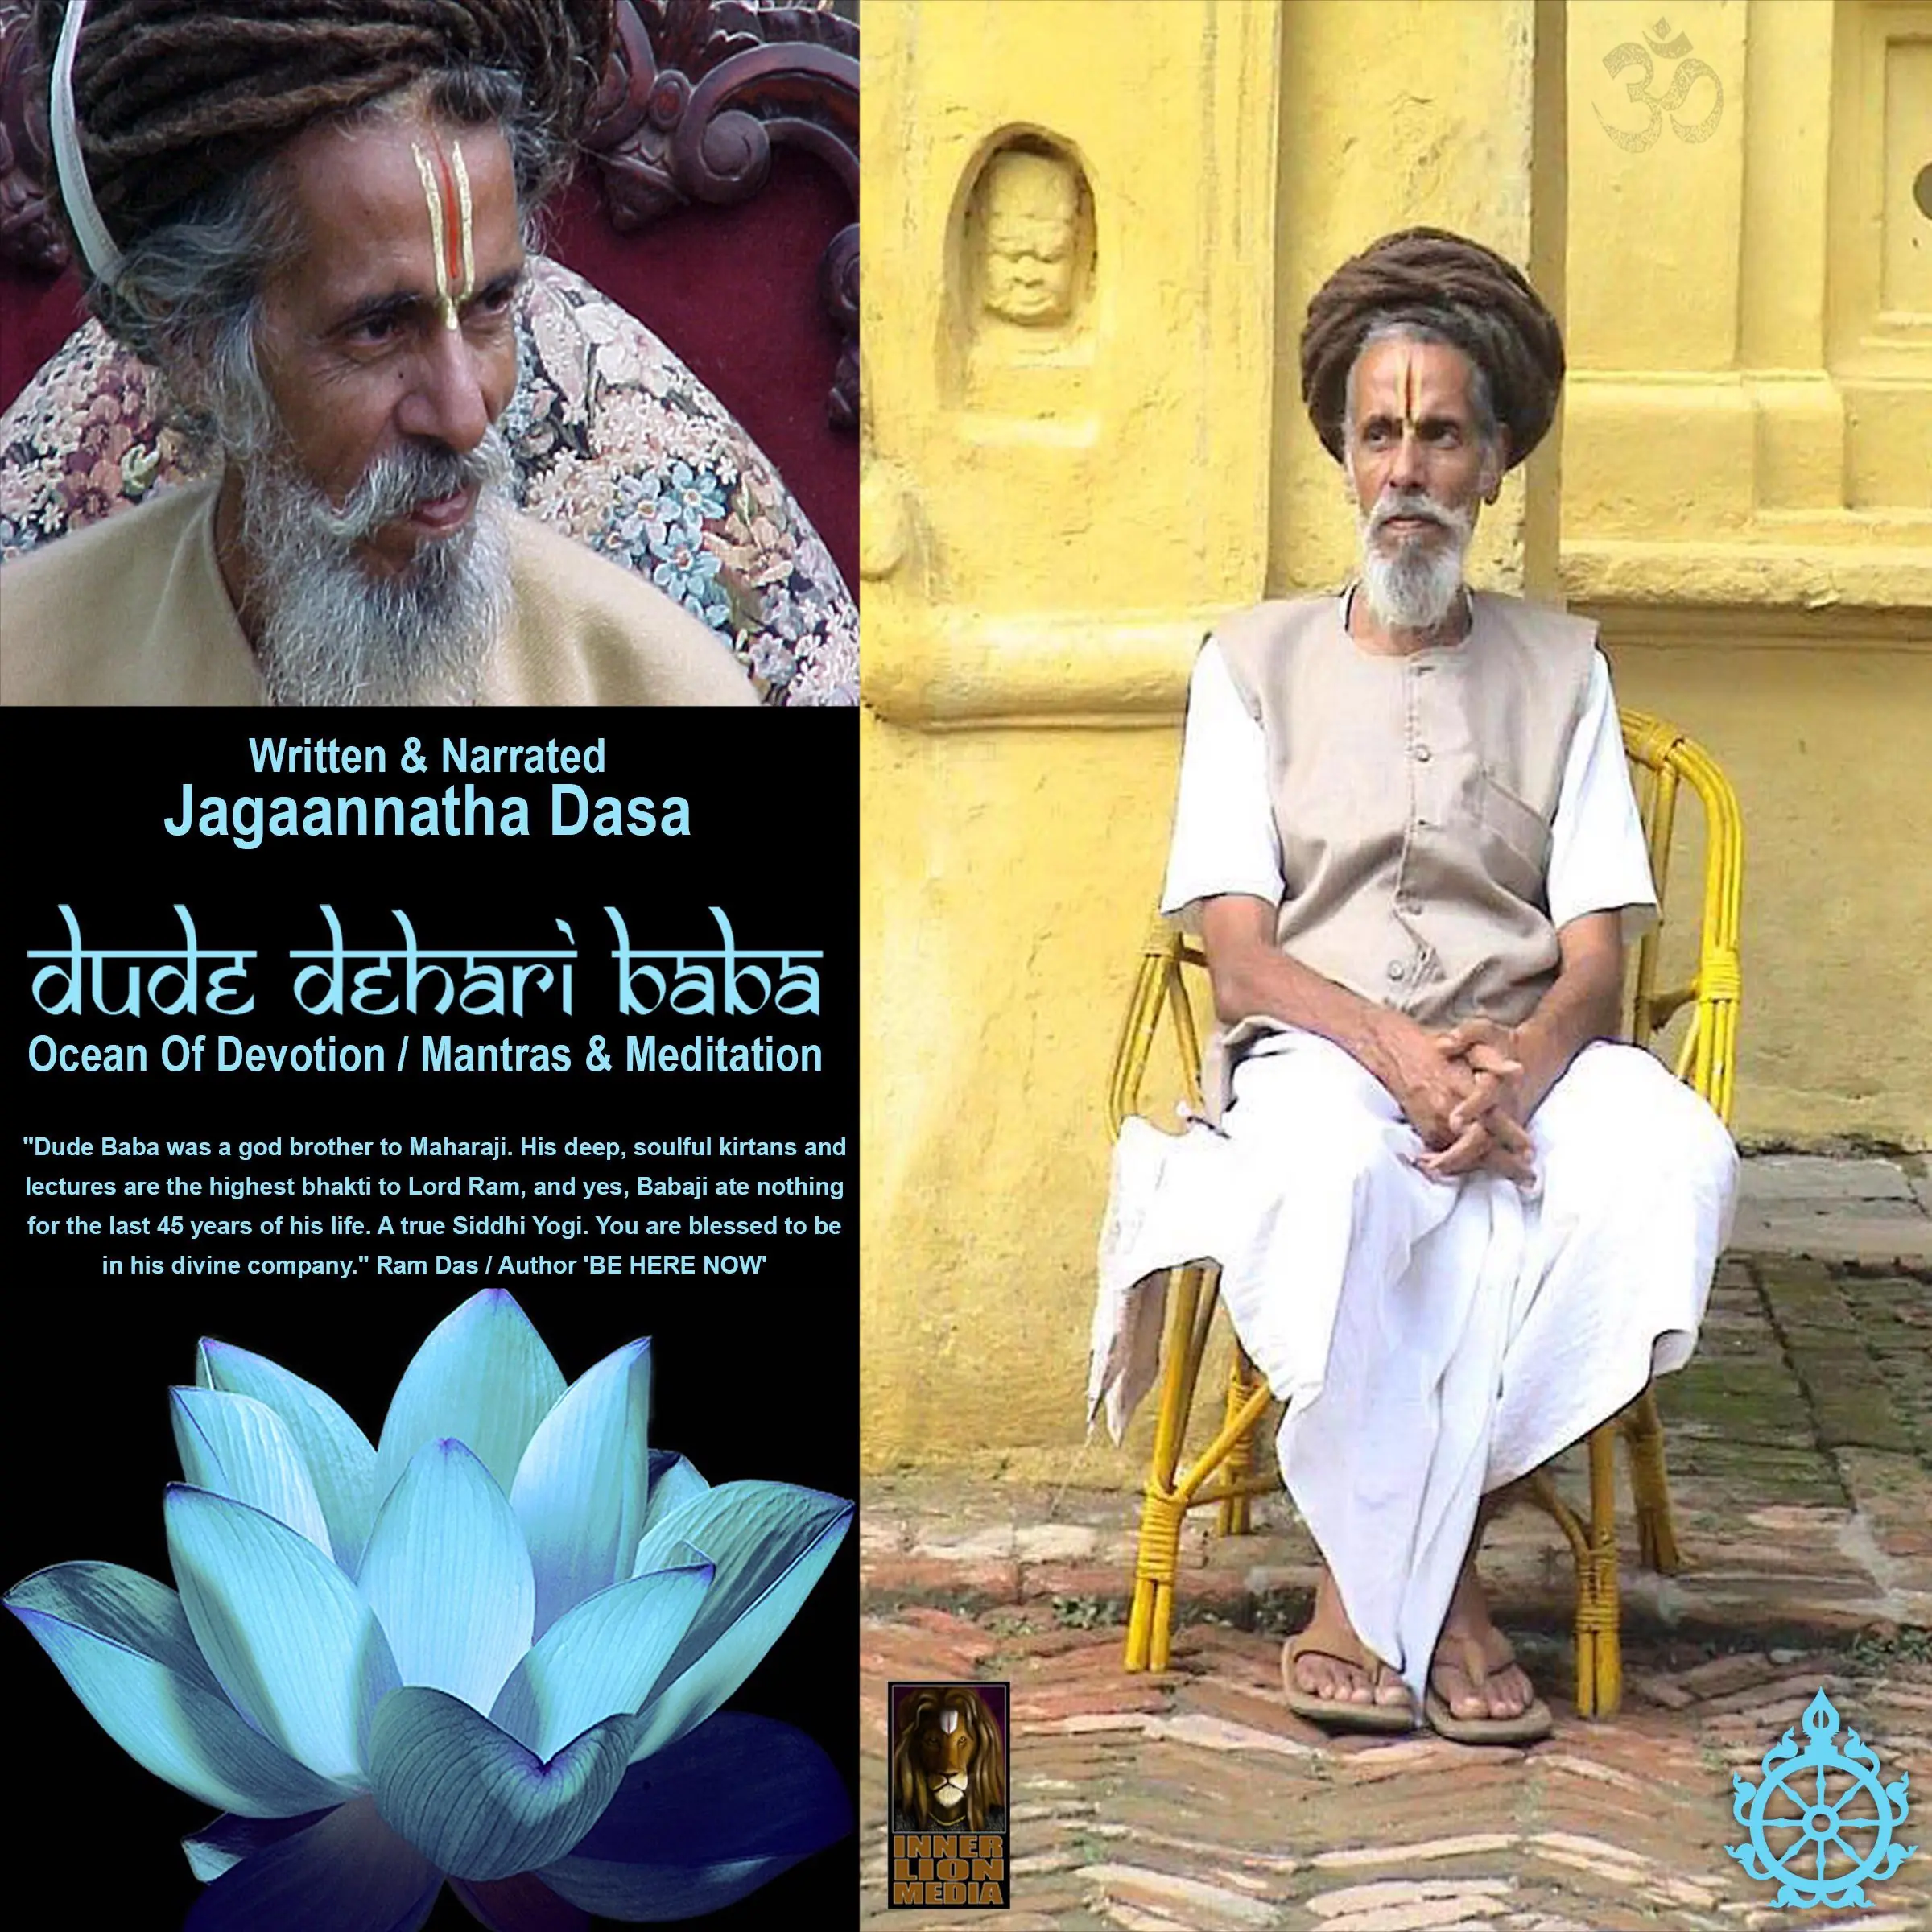 Dude Dehari Baba Ocean Of Devotion - Mantras & Meditation Audiobook by Jagannatha Dasa